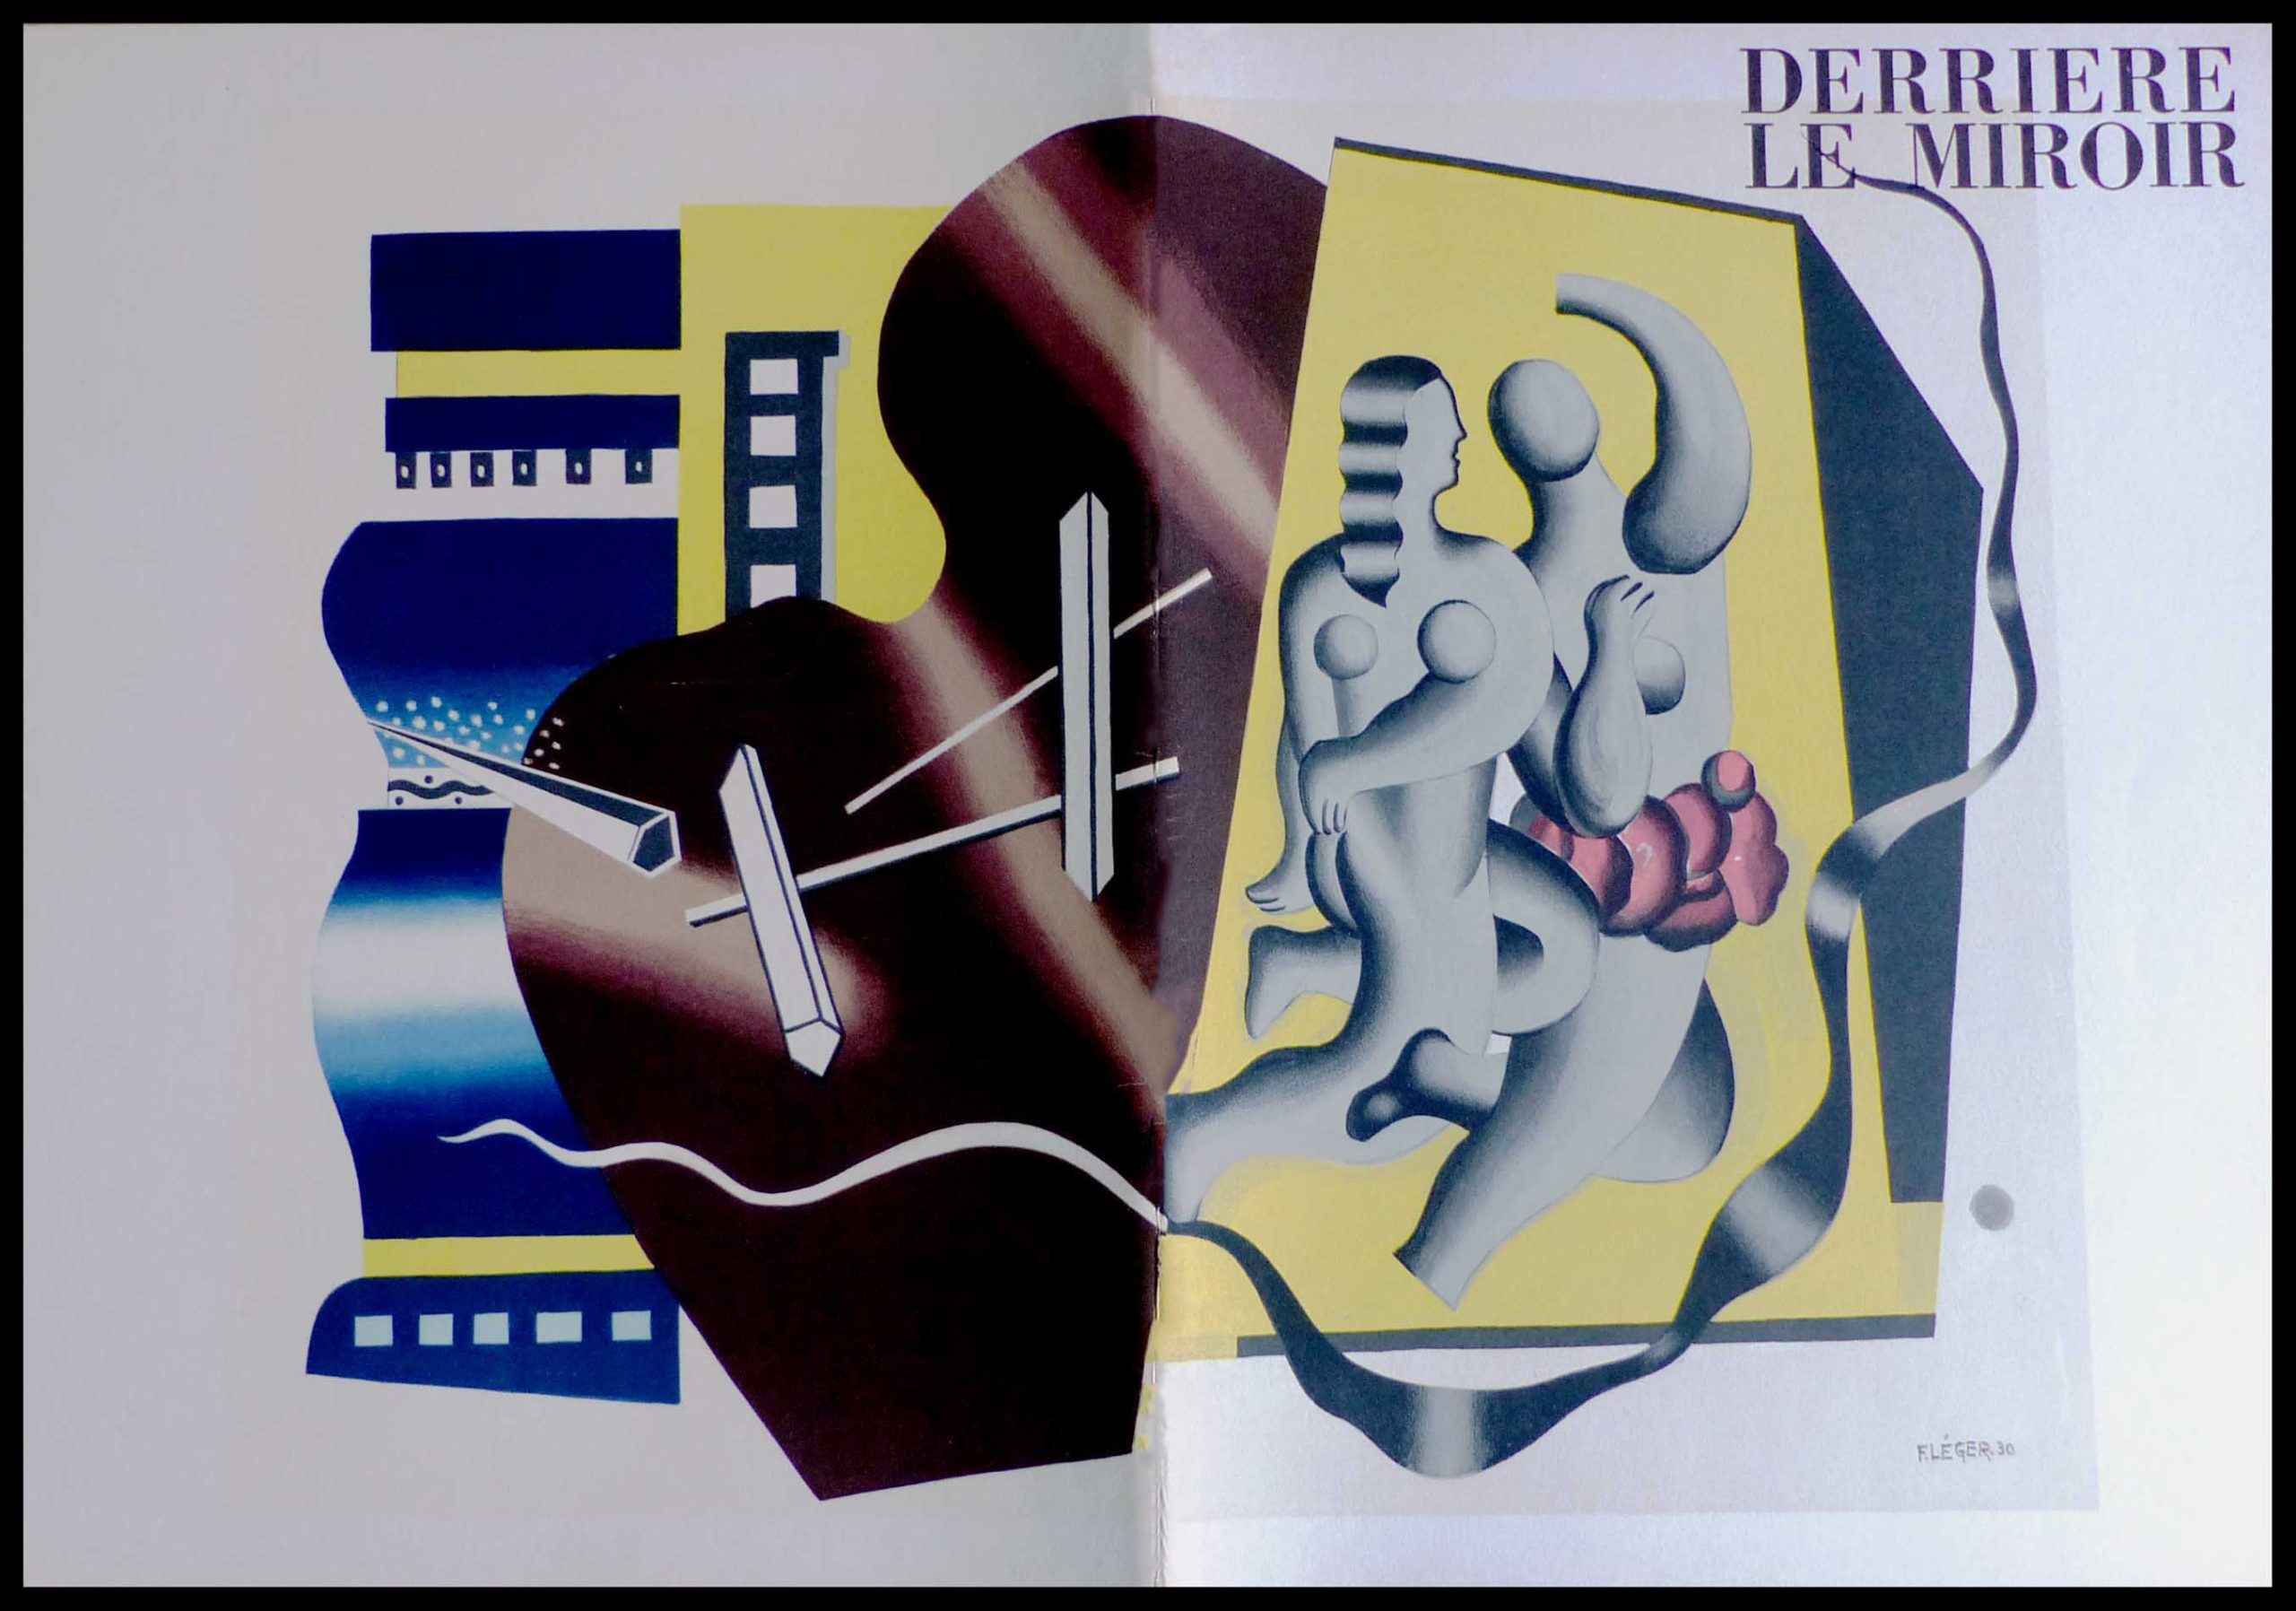 (alt="Fernand LEGER, original cover DLM, 1955, monogrammed and dated, printed by MOURLOT")